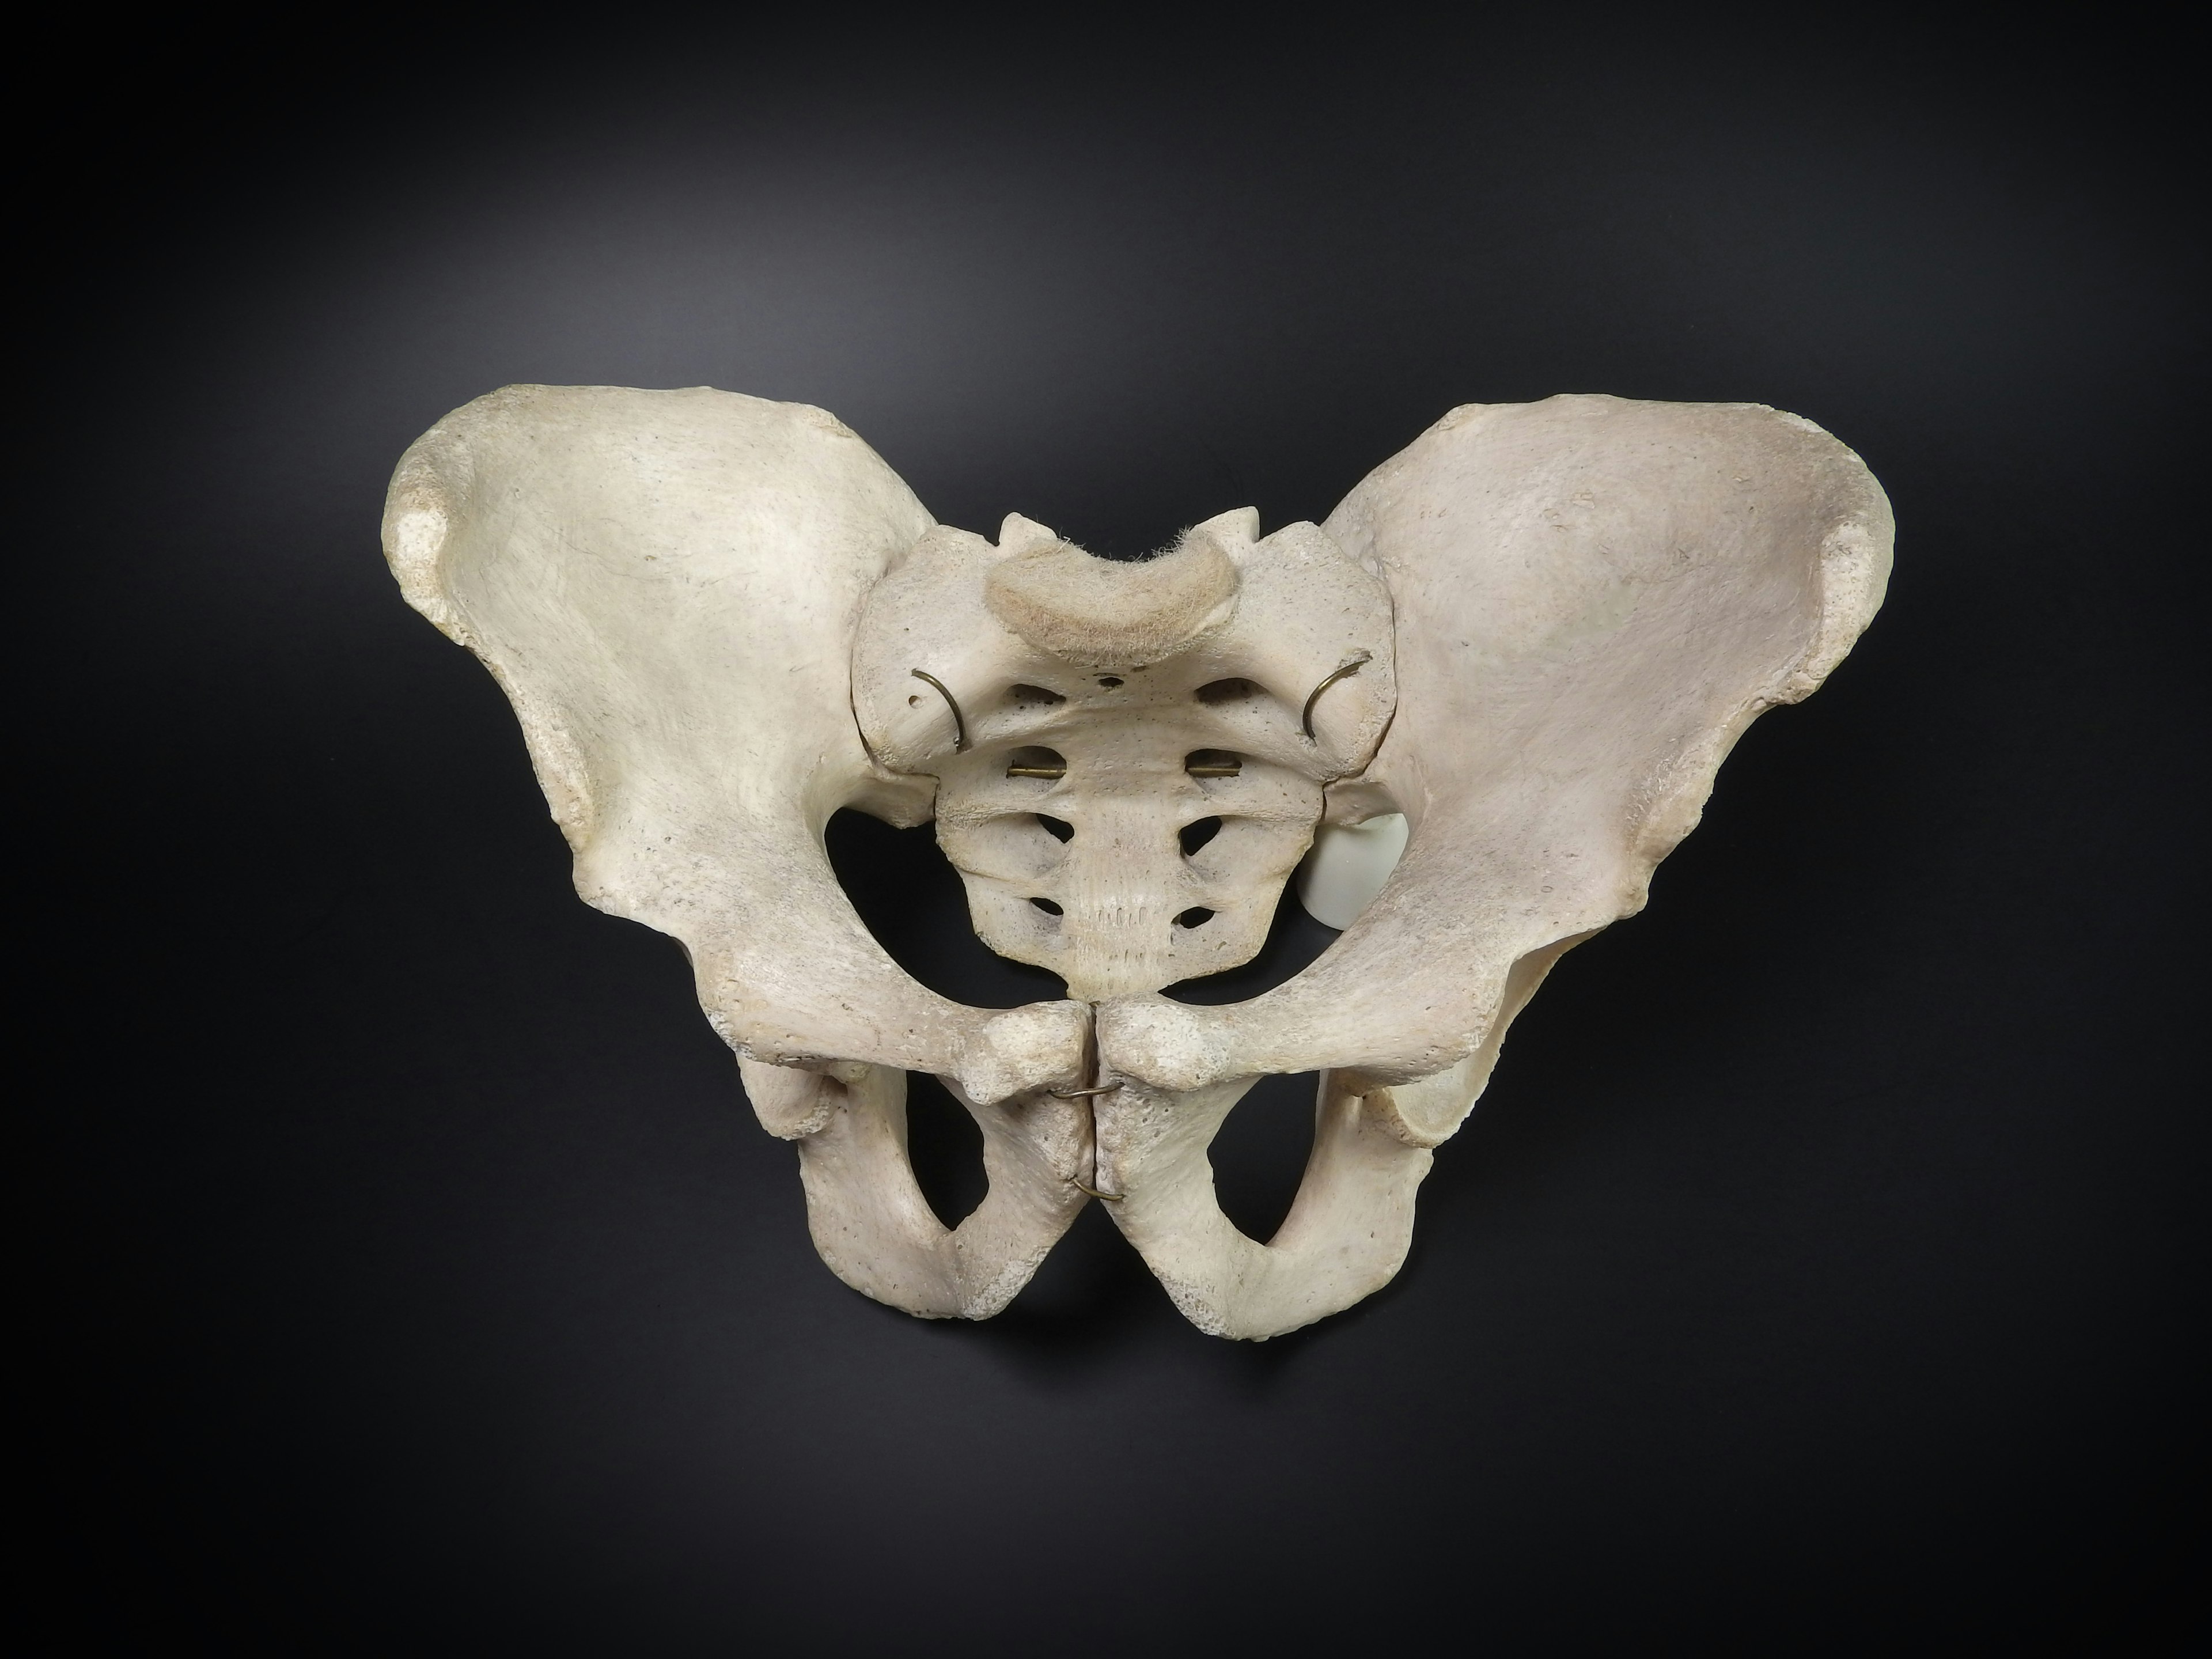 A human pelvis